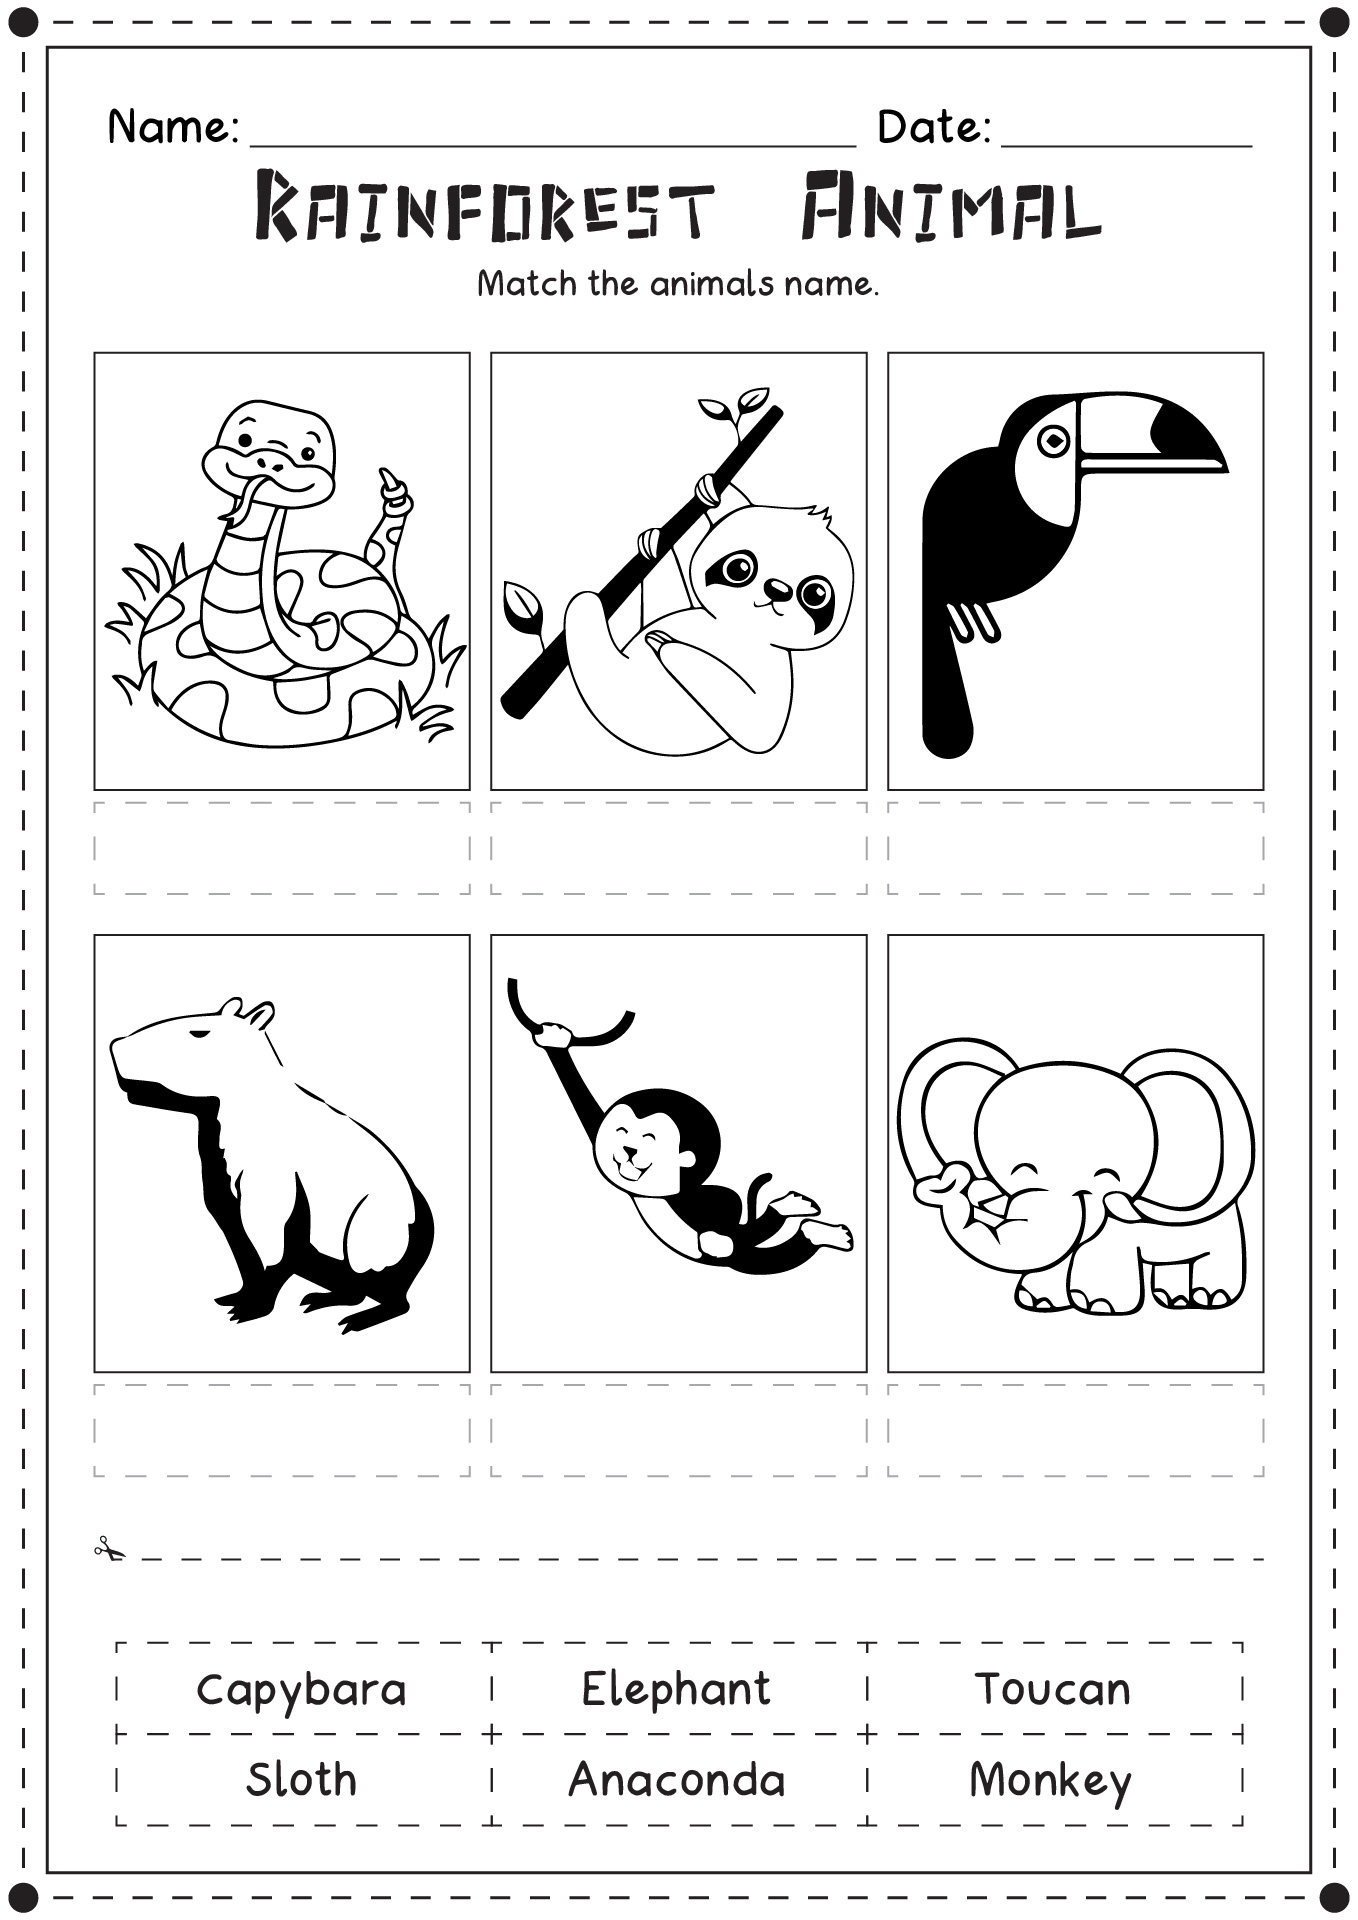 6 Best Images of Animal Coverings Worksheets For Kindergarten - Free